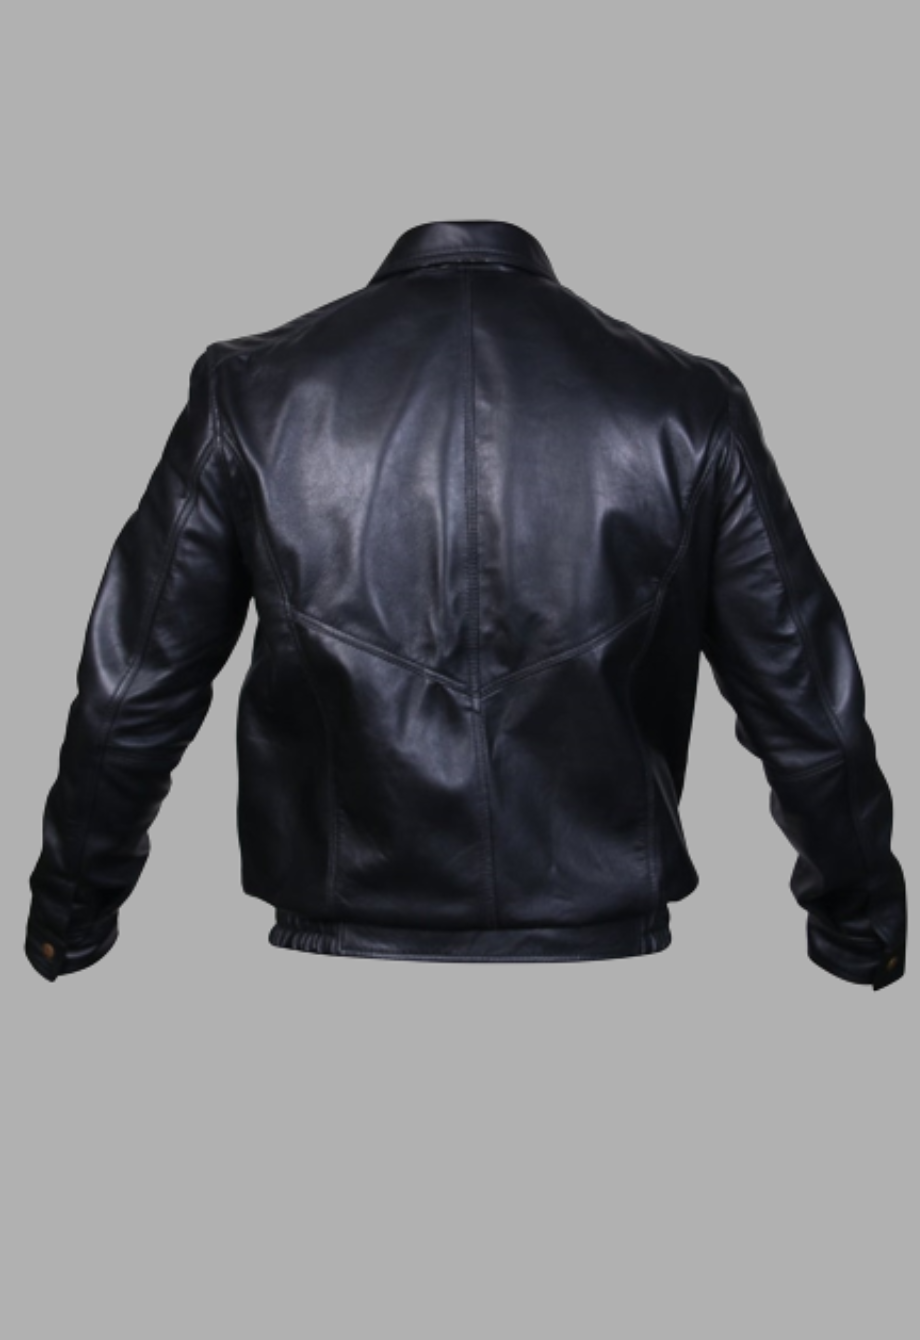 Flight Bomber Safari Leather Jacket